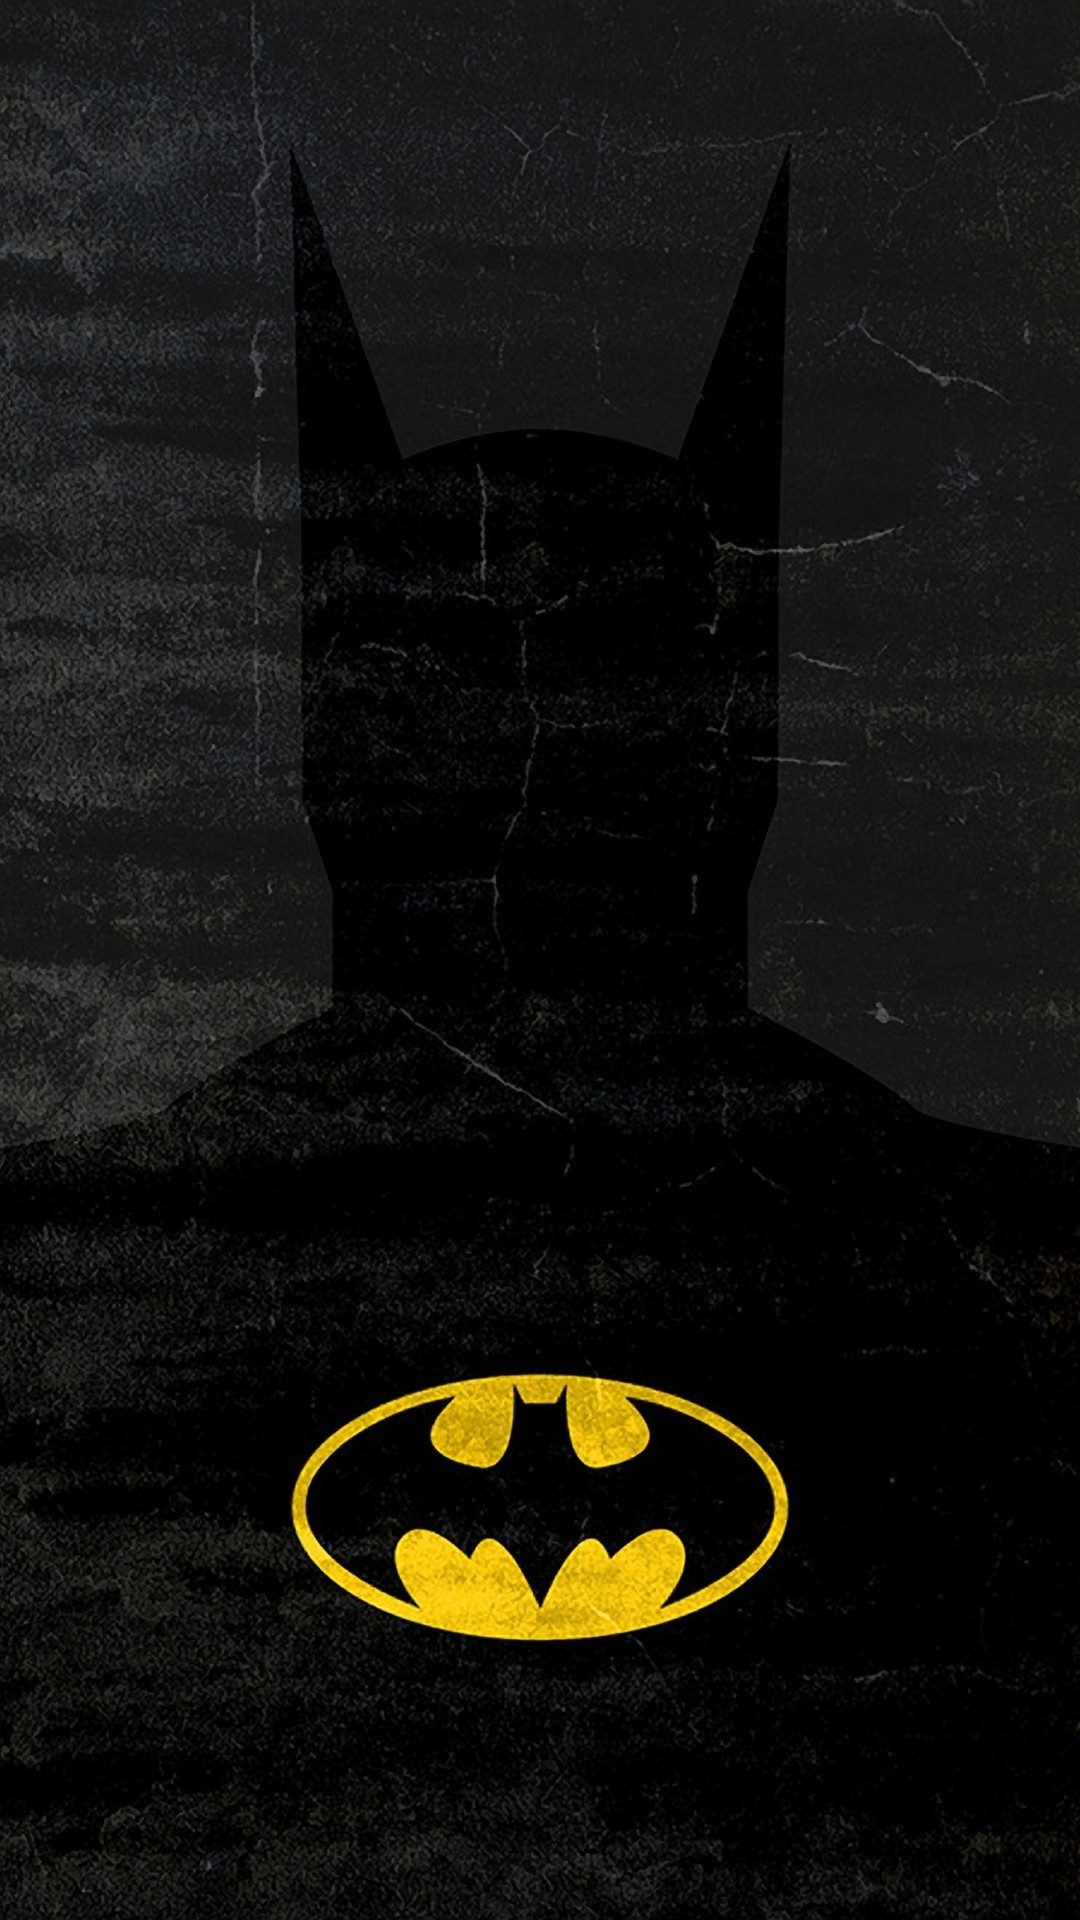 1080x1920 ... Collection of Batman Phone Wallpapers on Spyder Wallpapers Â· modern  batman cell ...